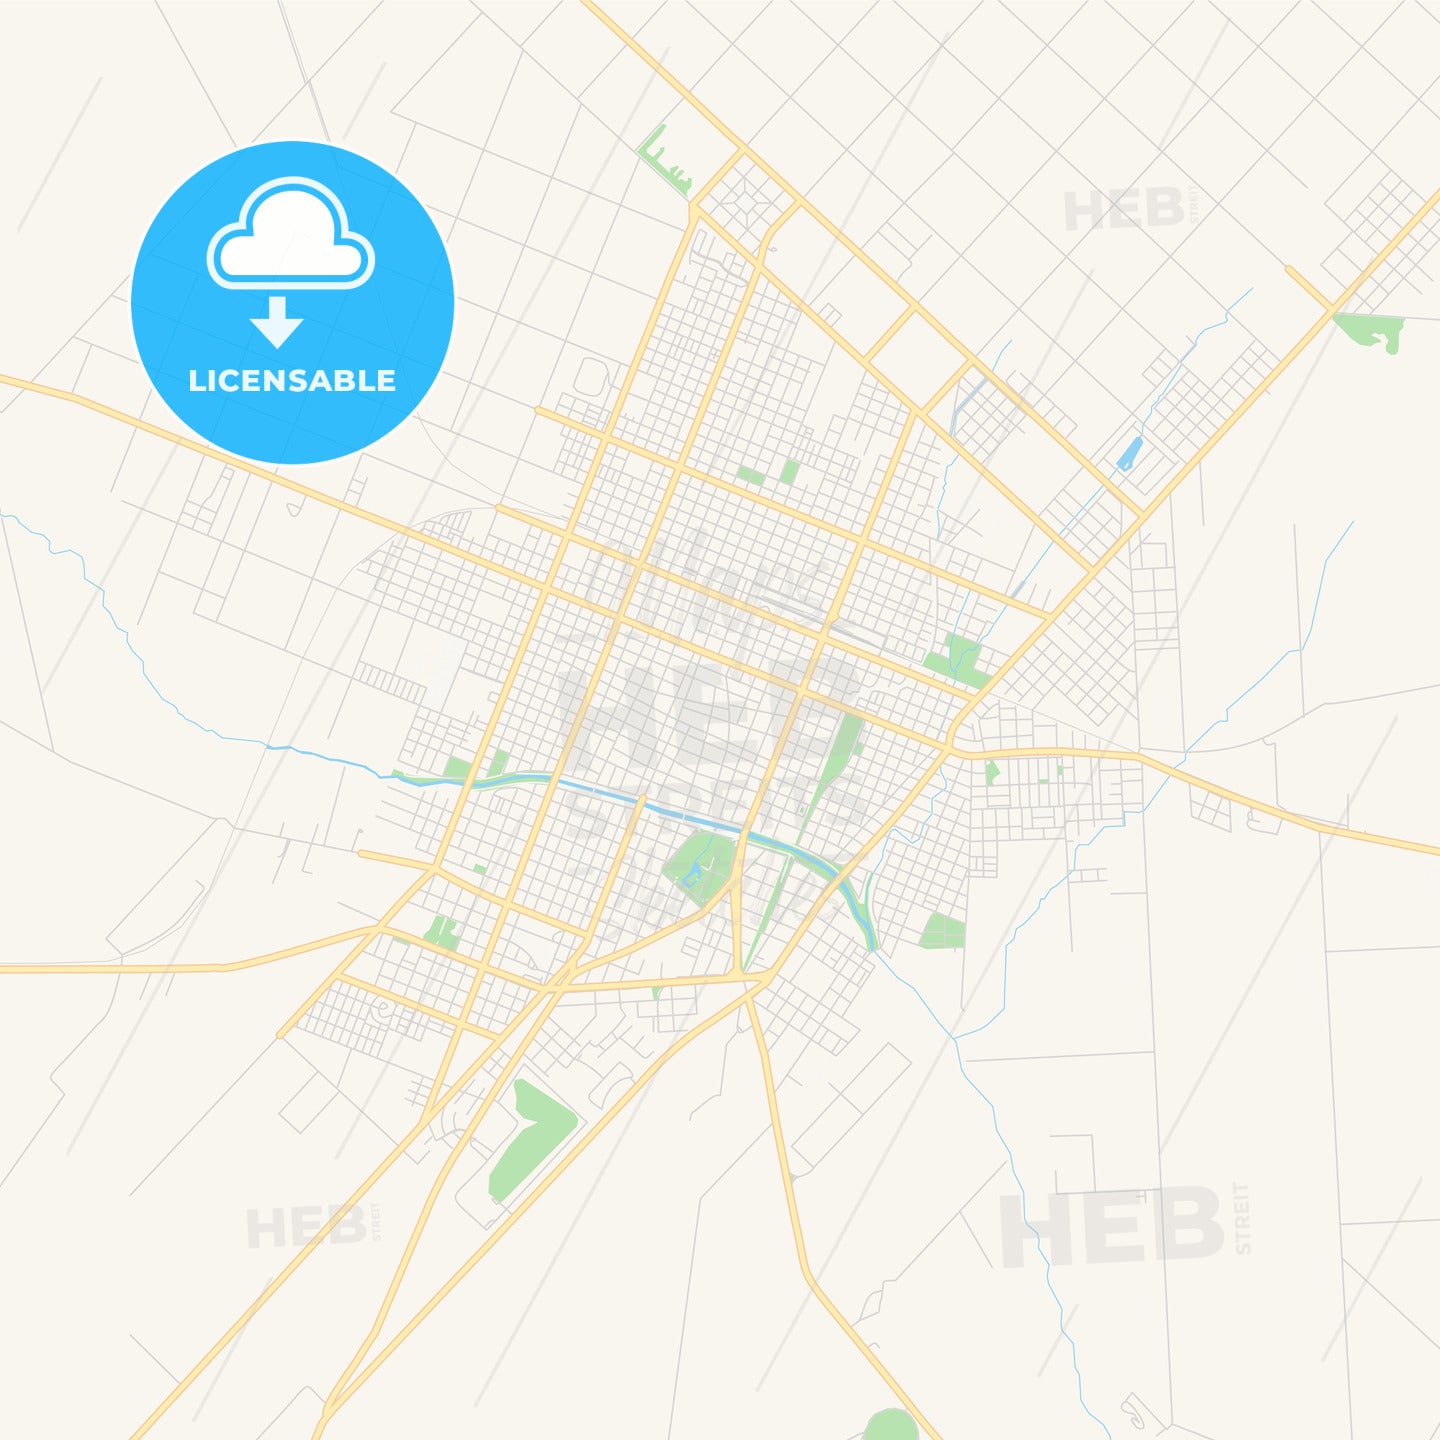 Printable street map of Pergamino, Argentina